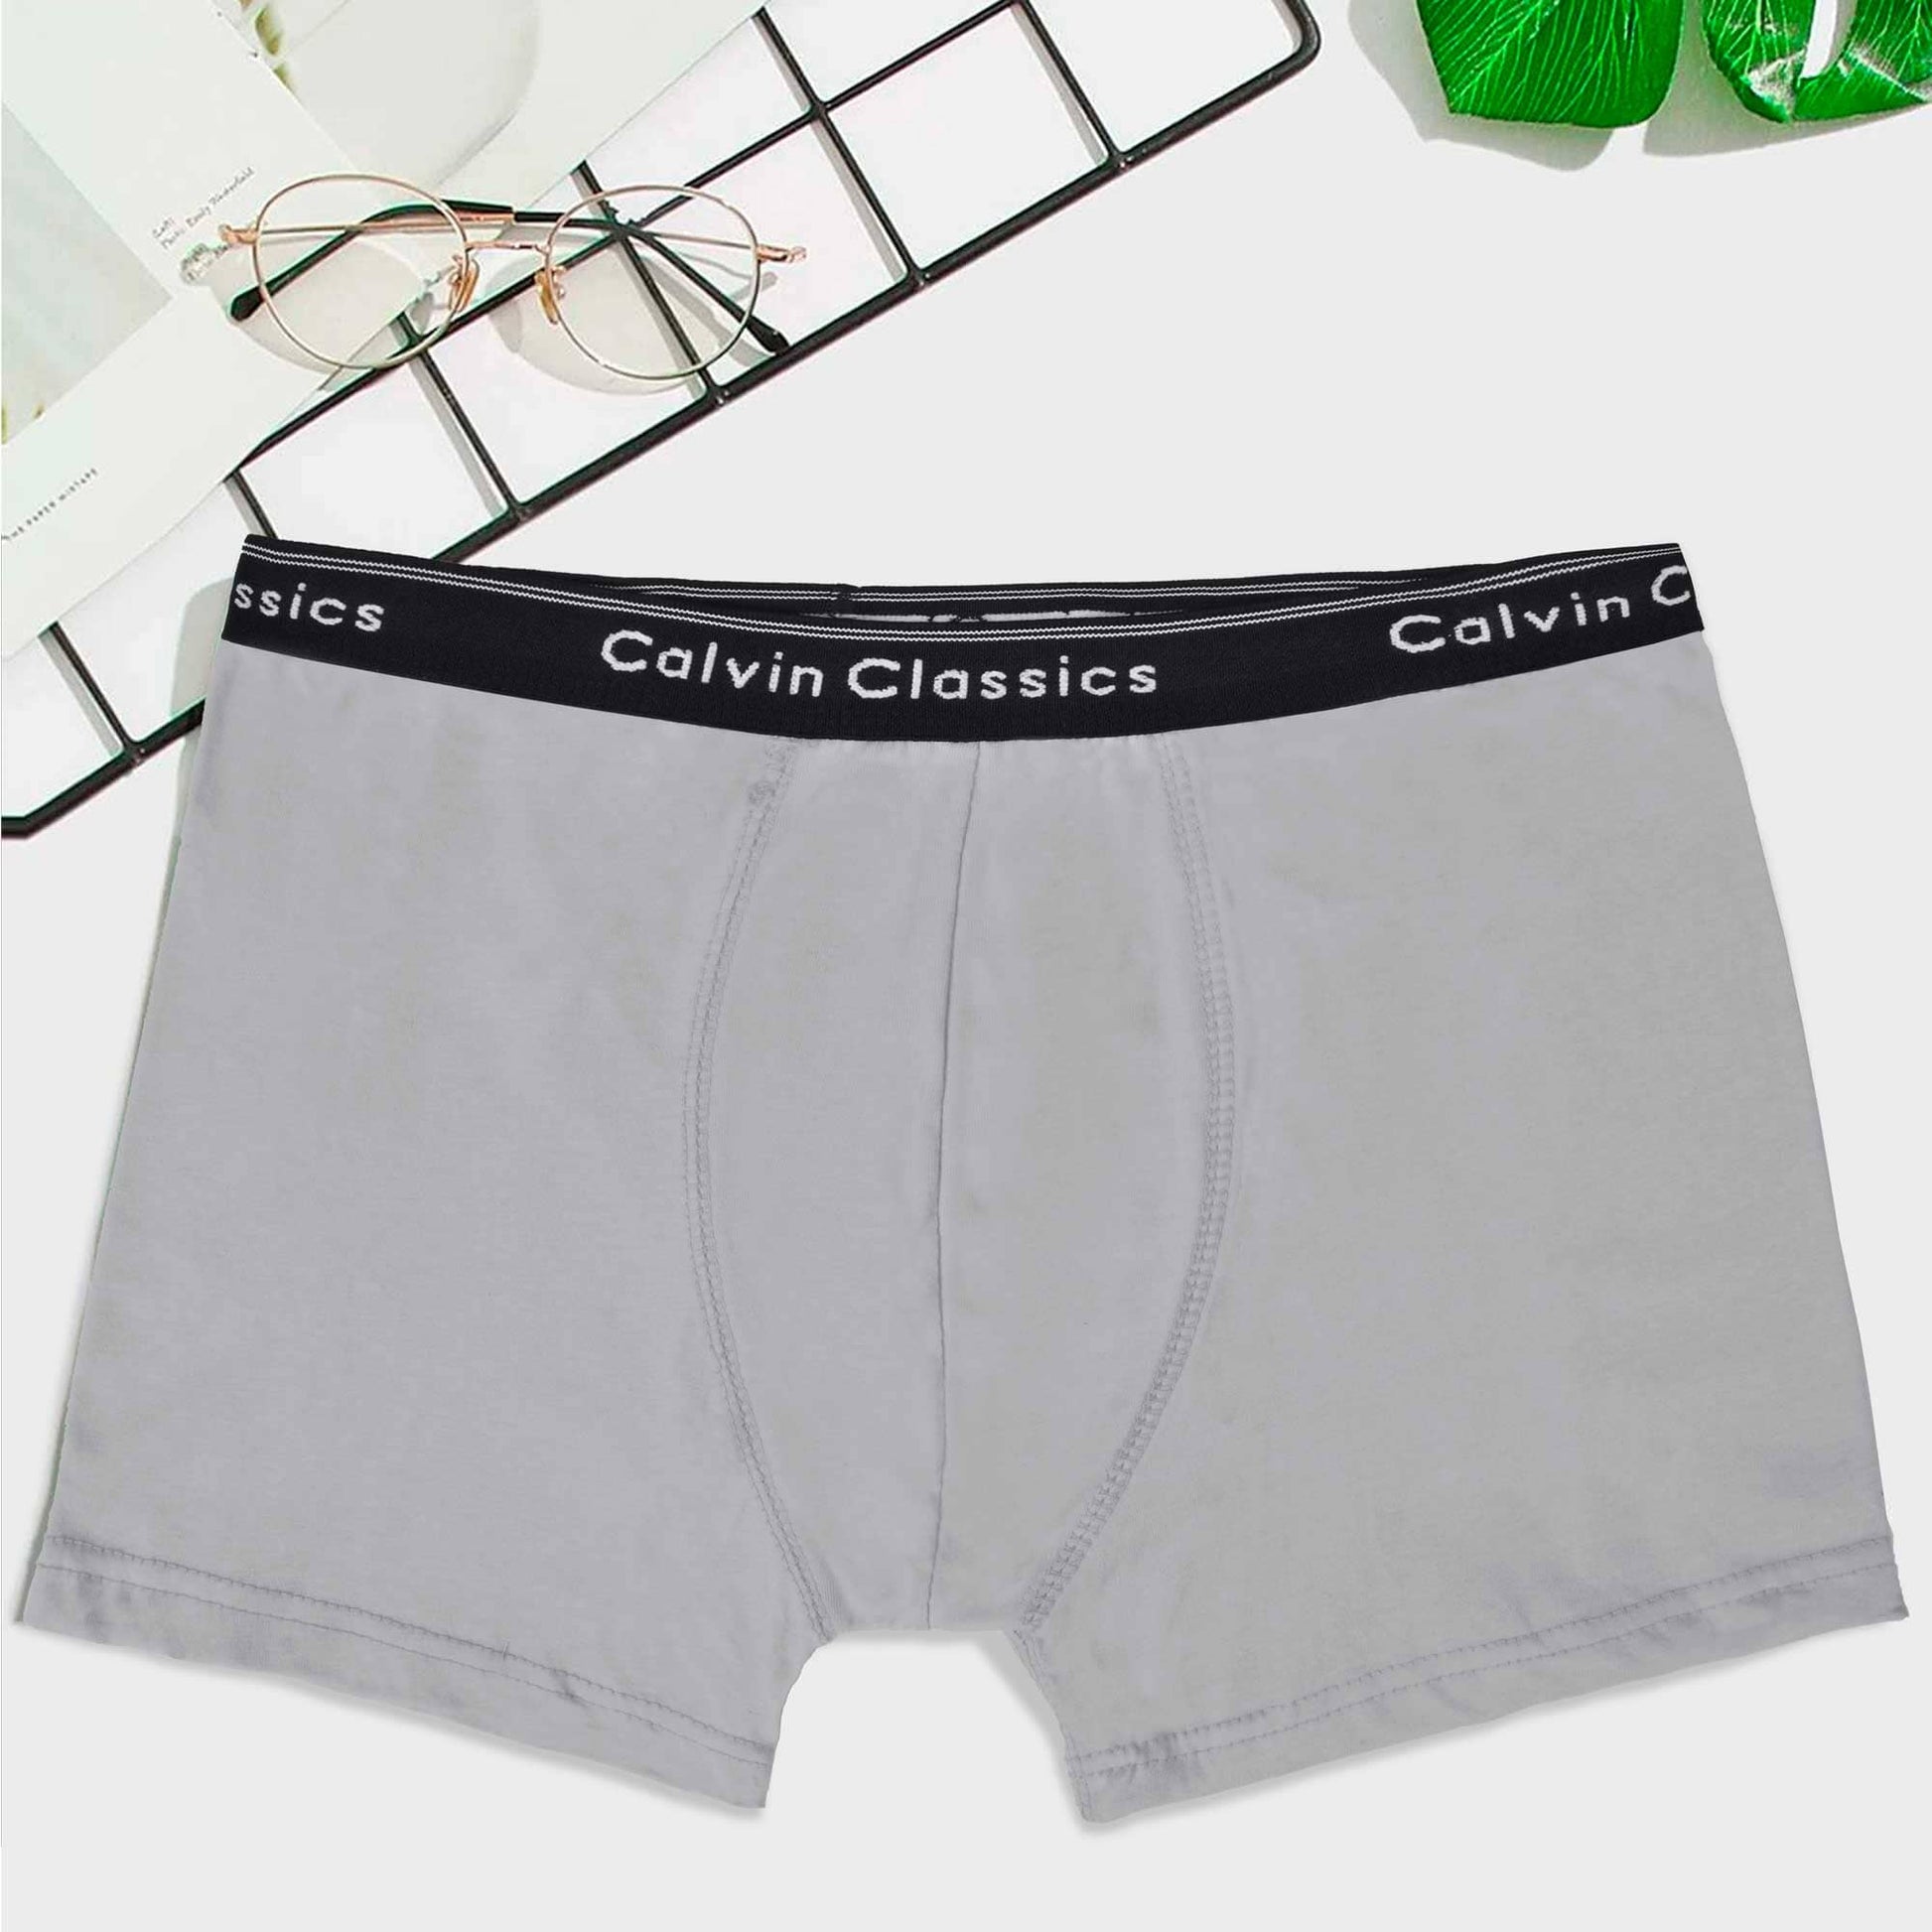 Calvin Classic Men's Boxer Shorts Men's Underwear SZK Grey S 